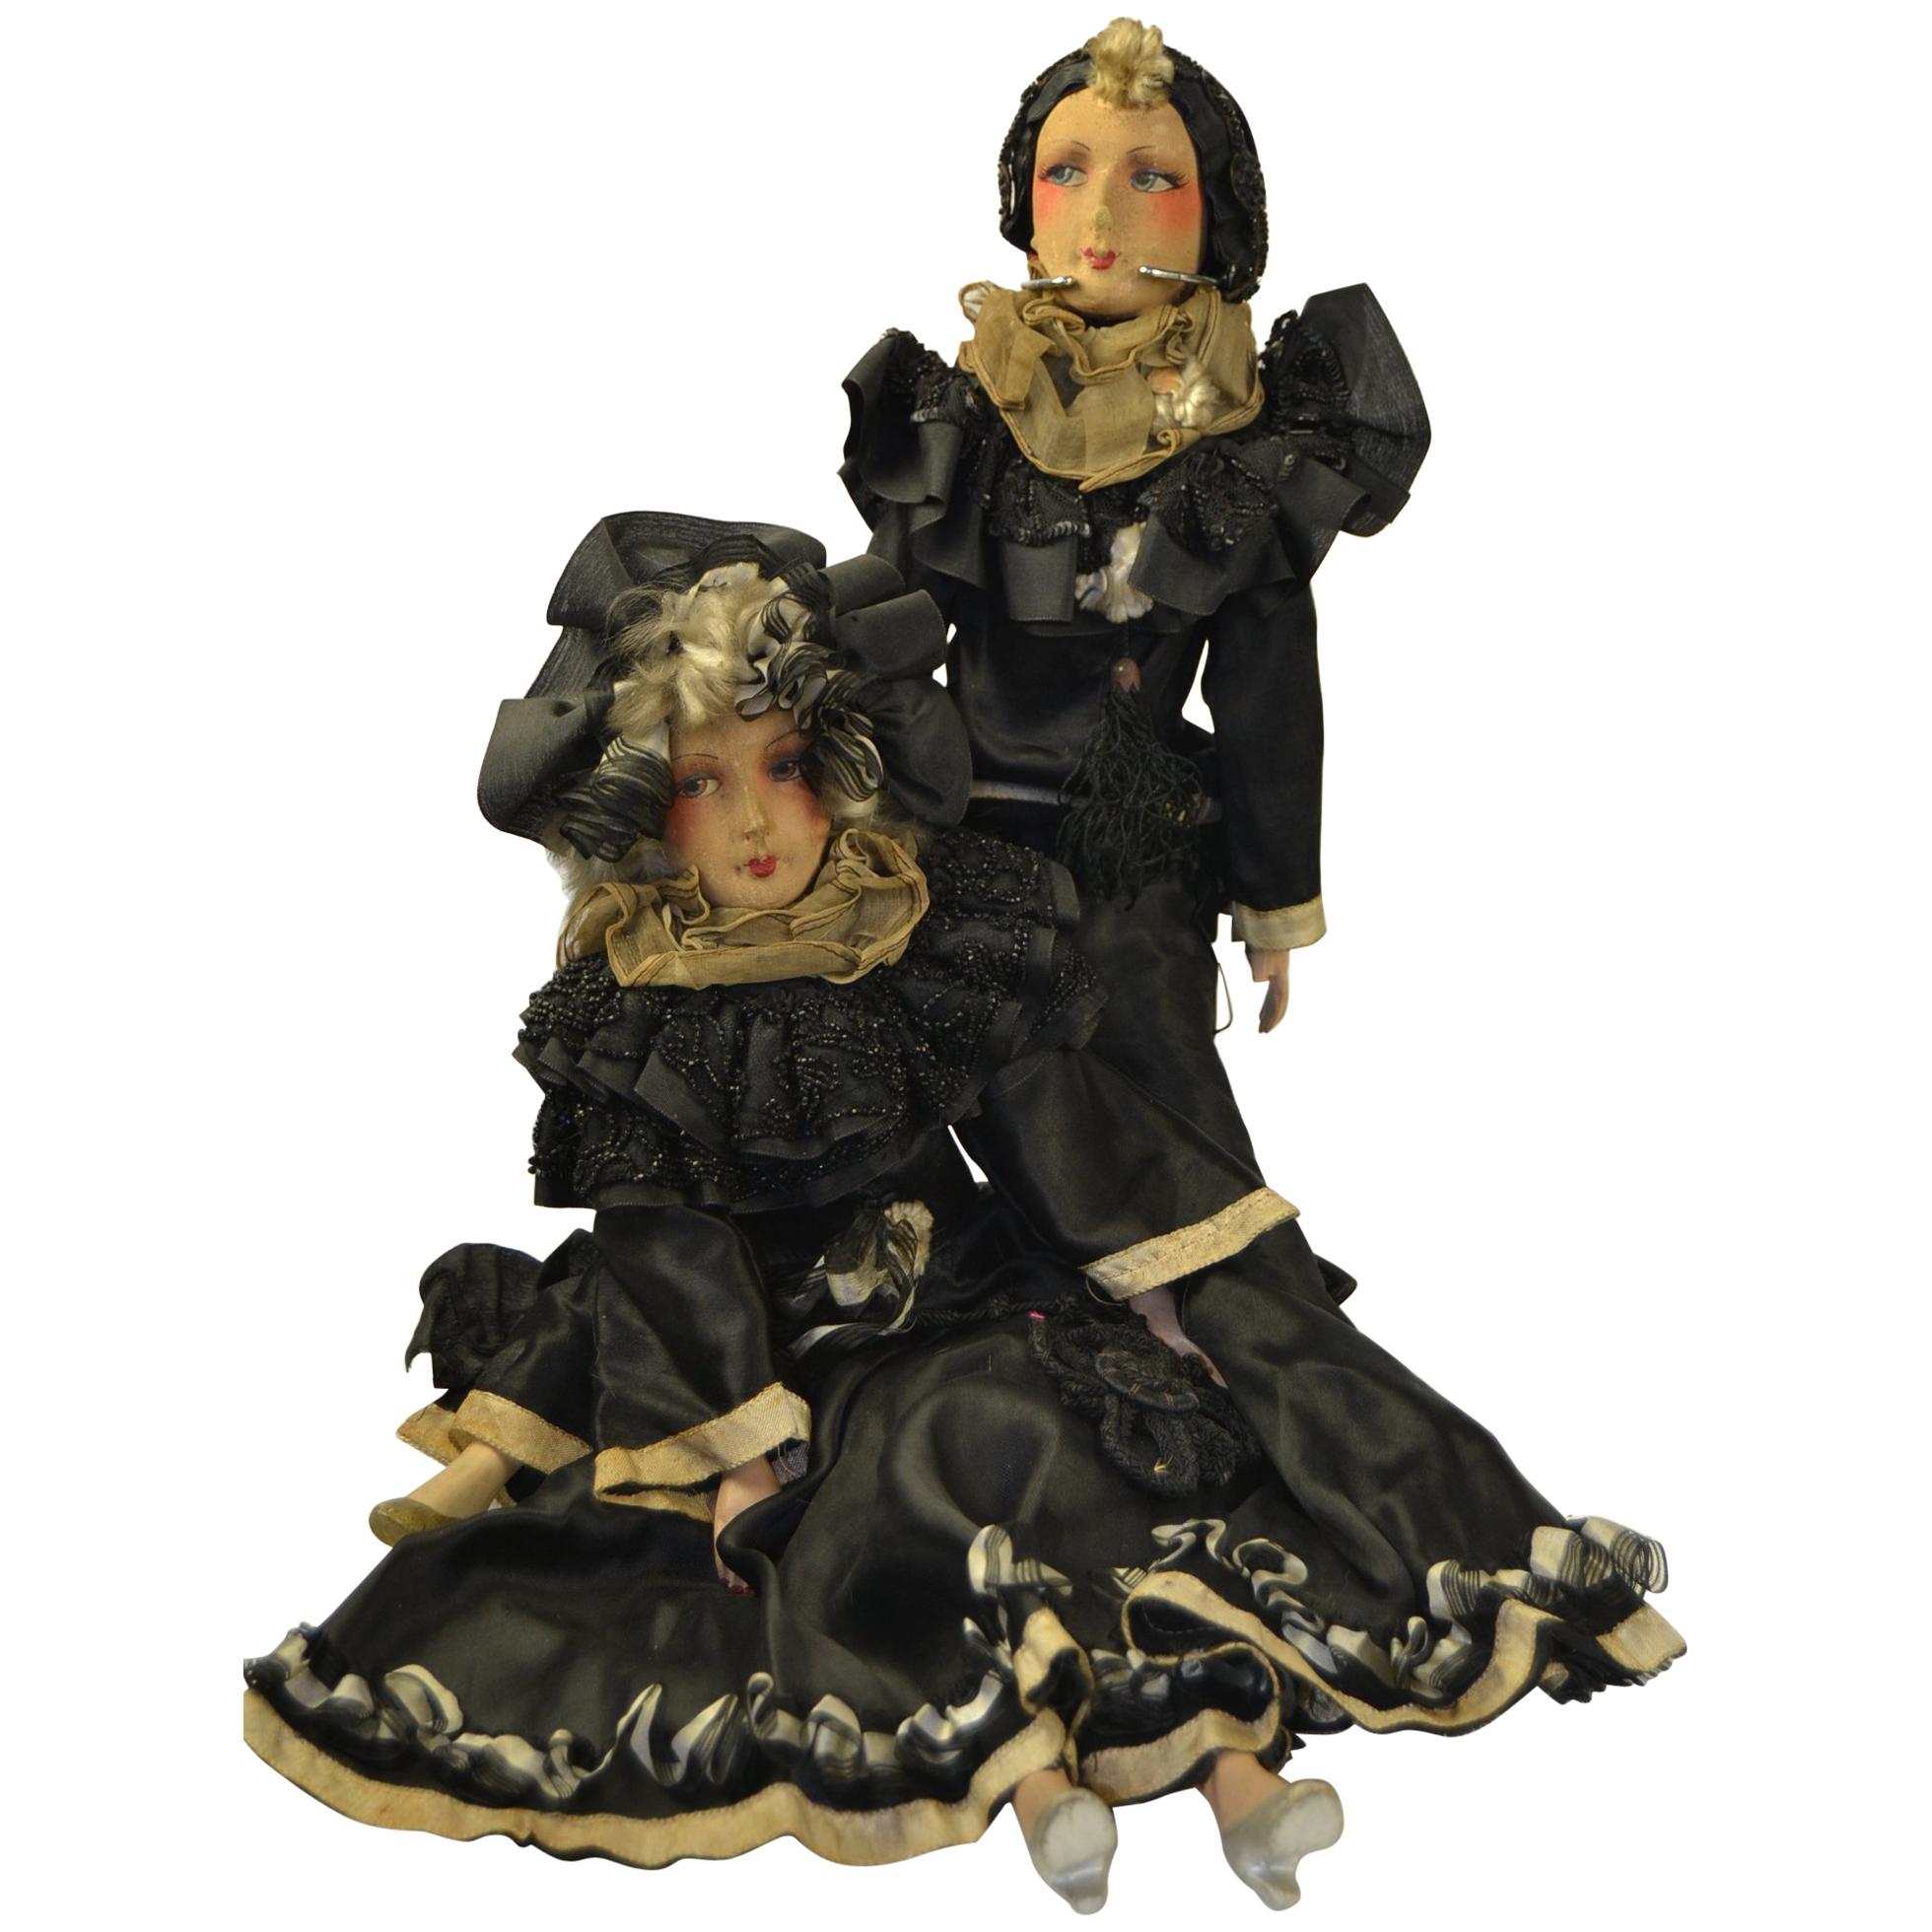 1920s Pair of French Boudoir Dolls, Salon Dolls, Pierrot and Pierrette